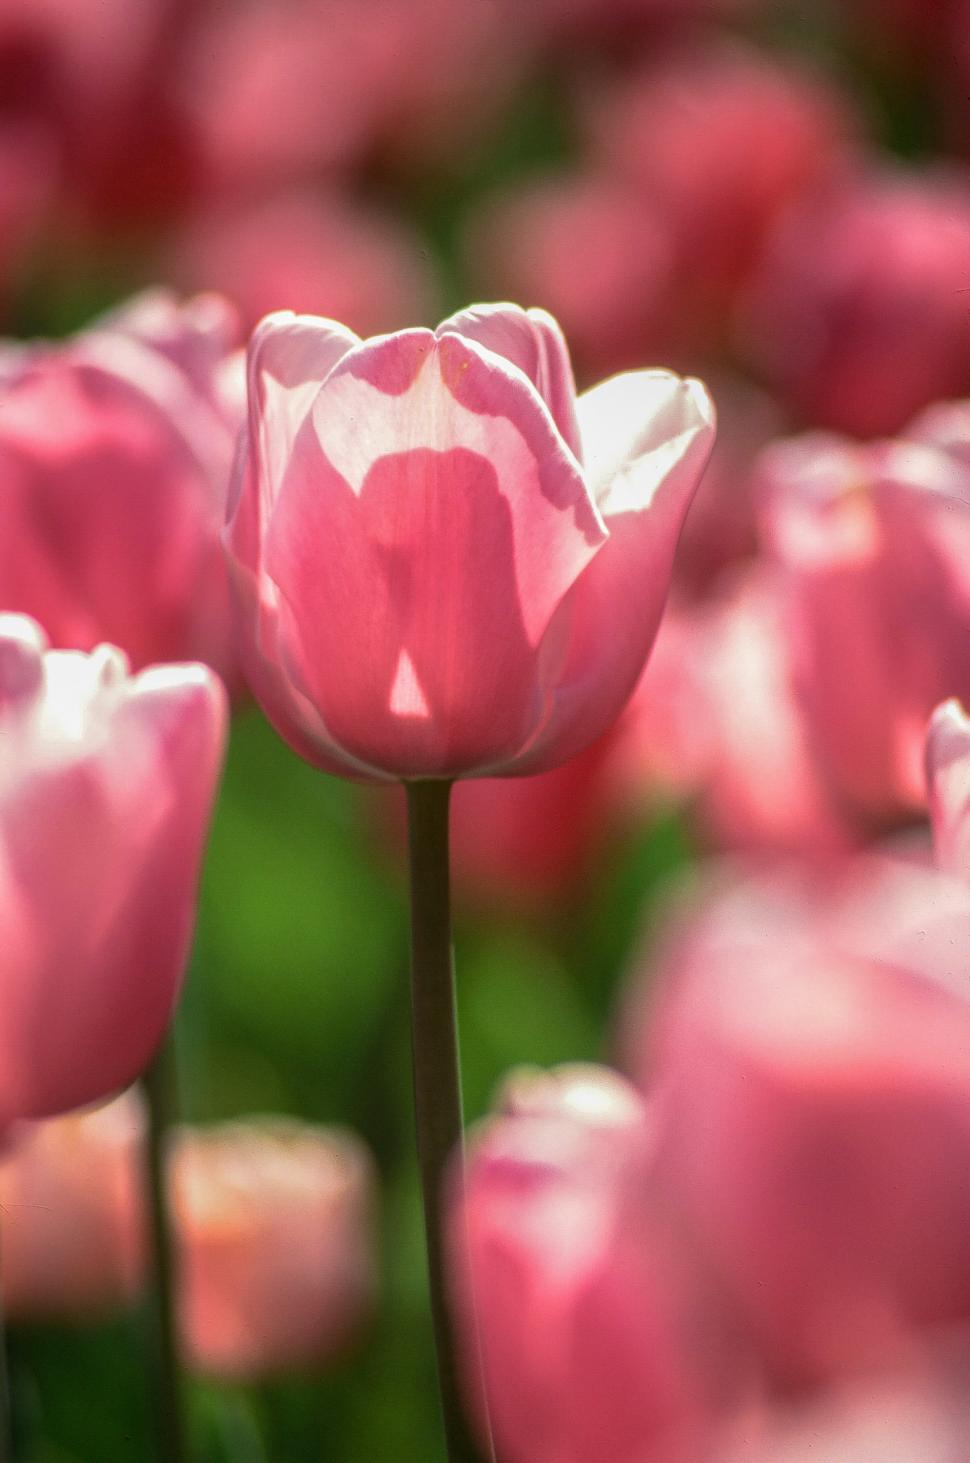 Free Image of Pink tulips 